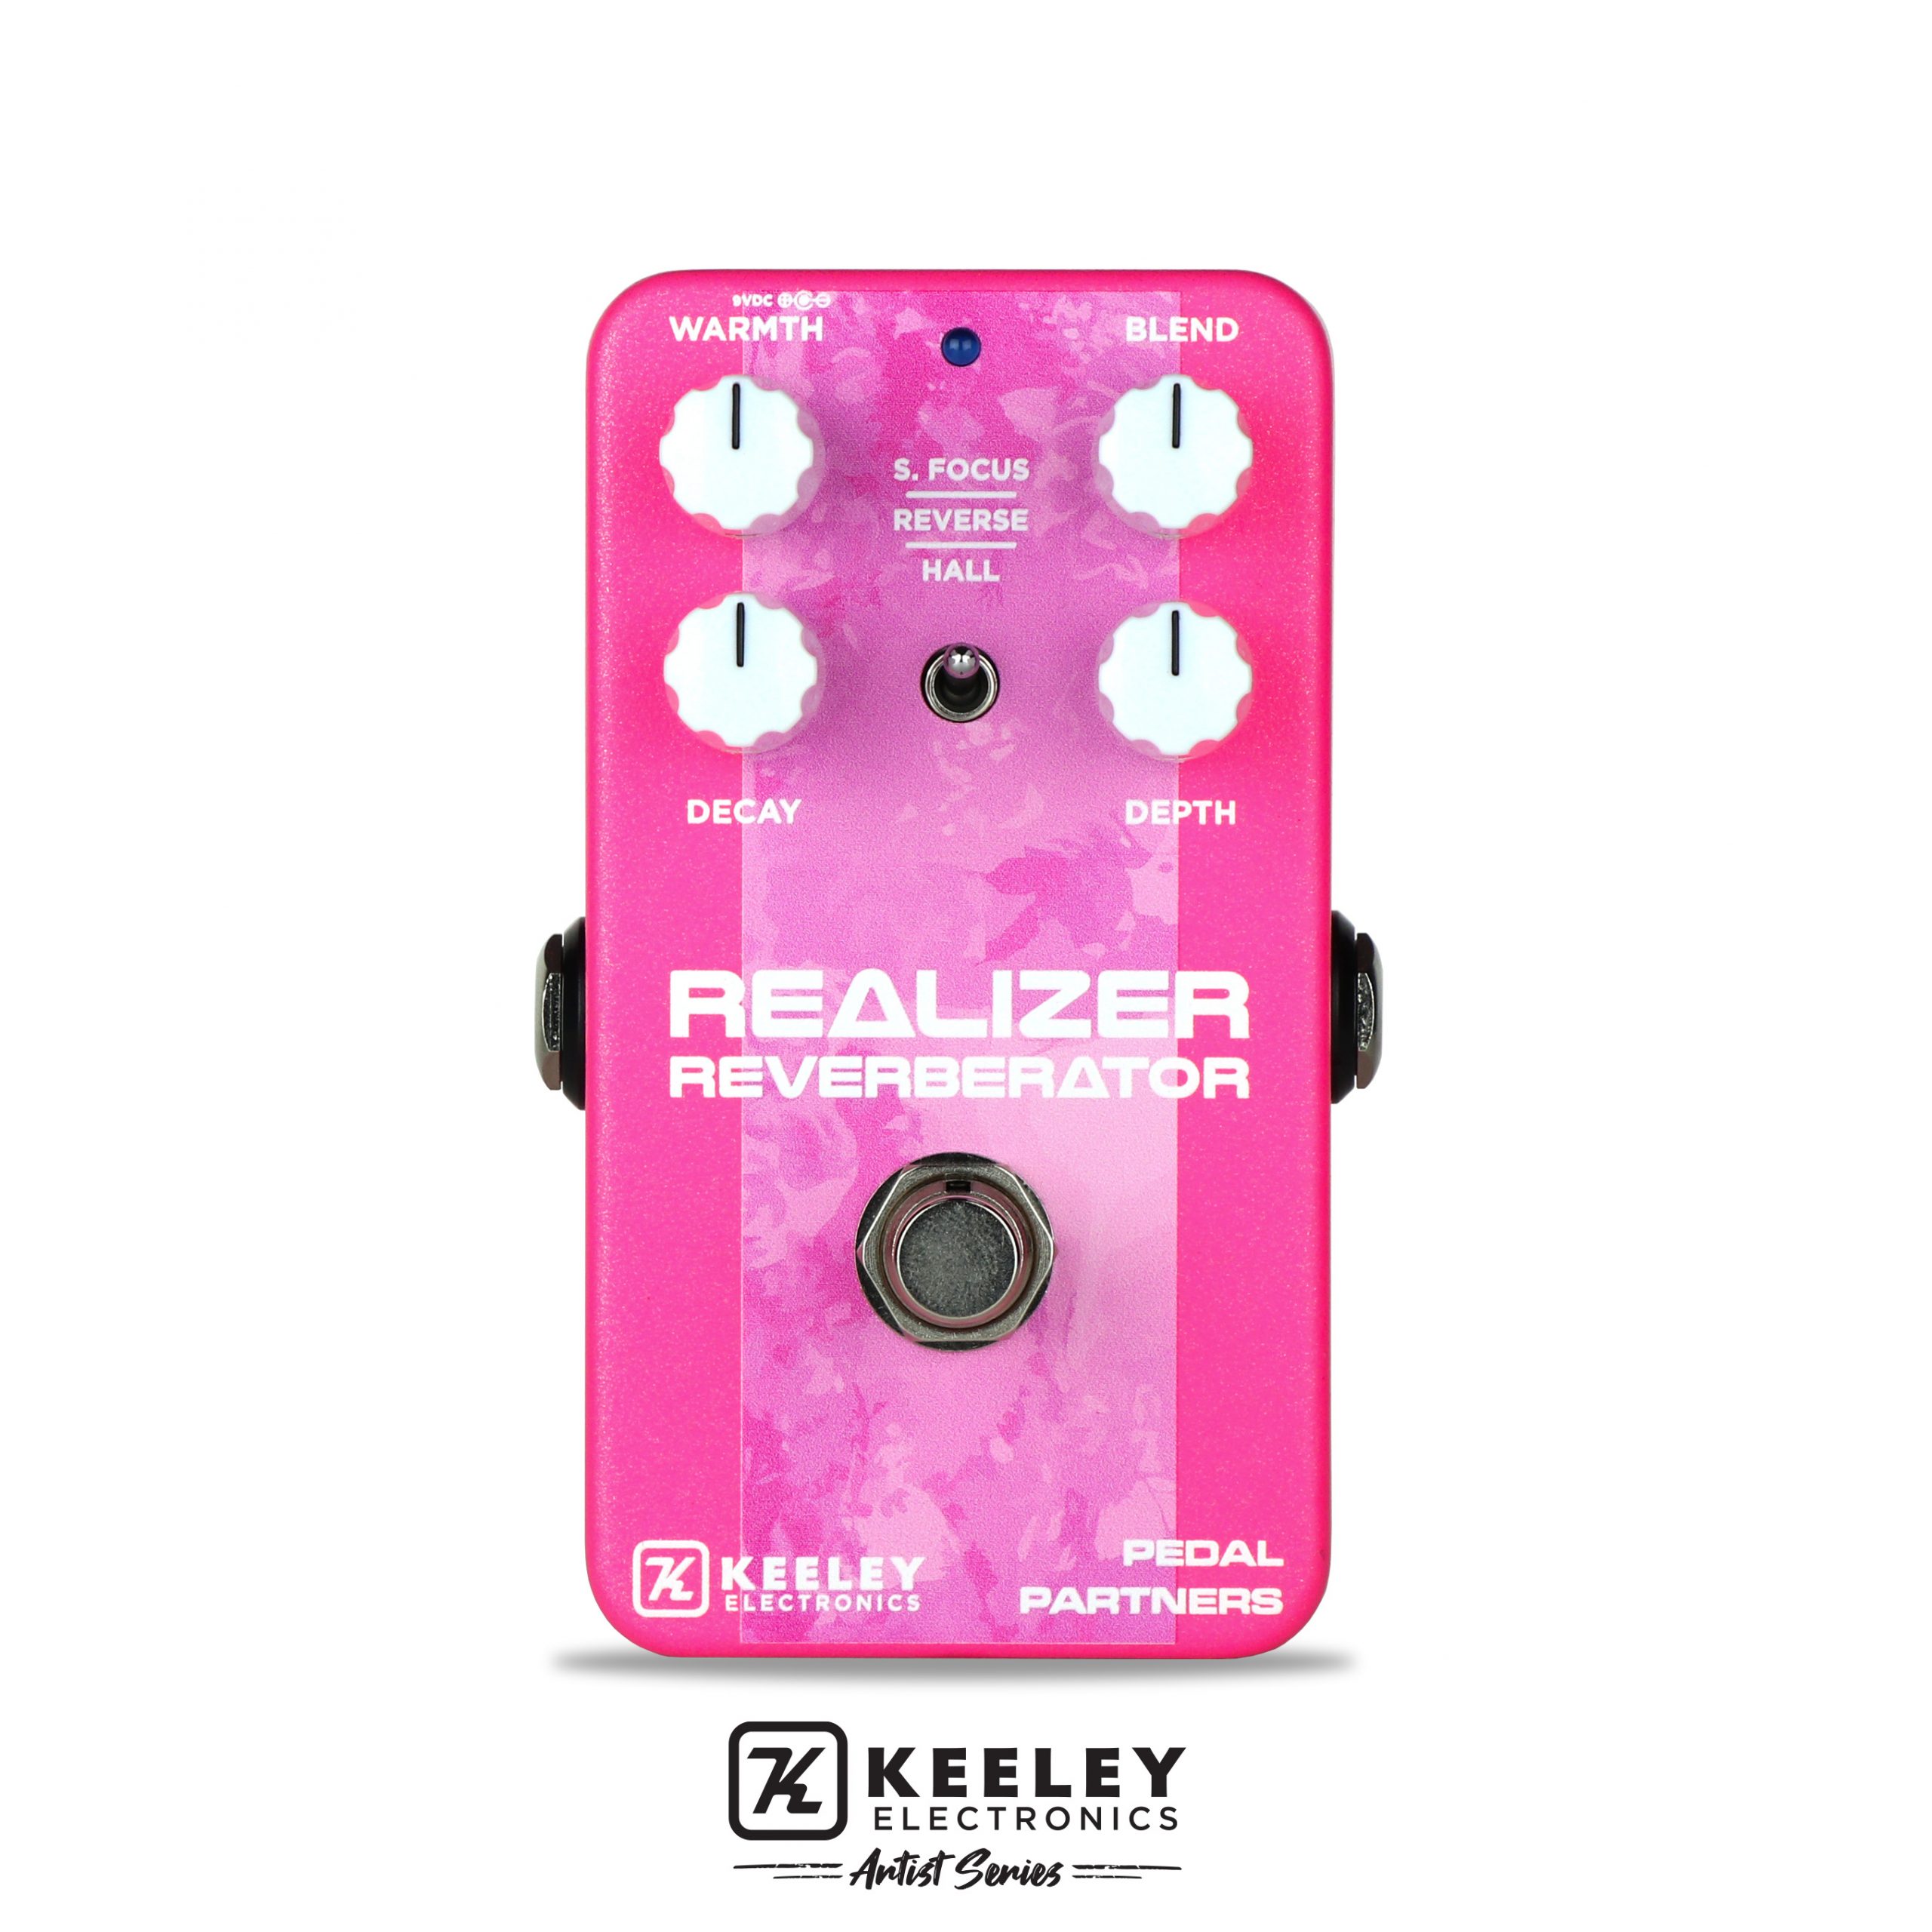 Realizer Reverberator - Pedal Partners Artist Series